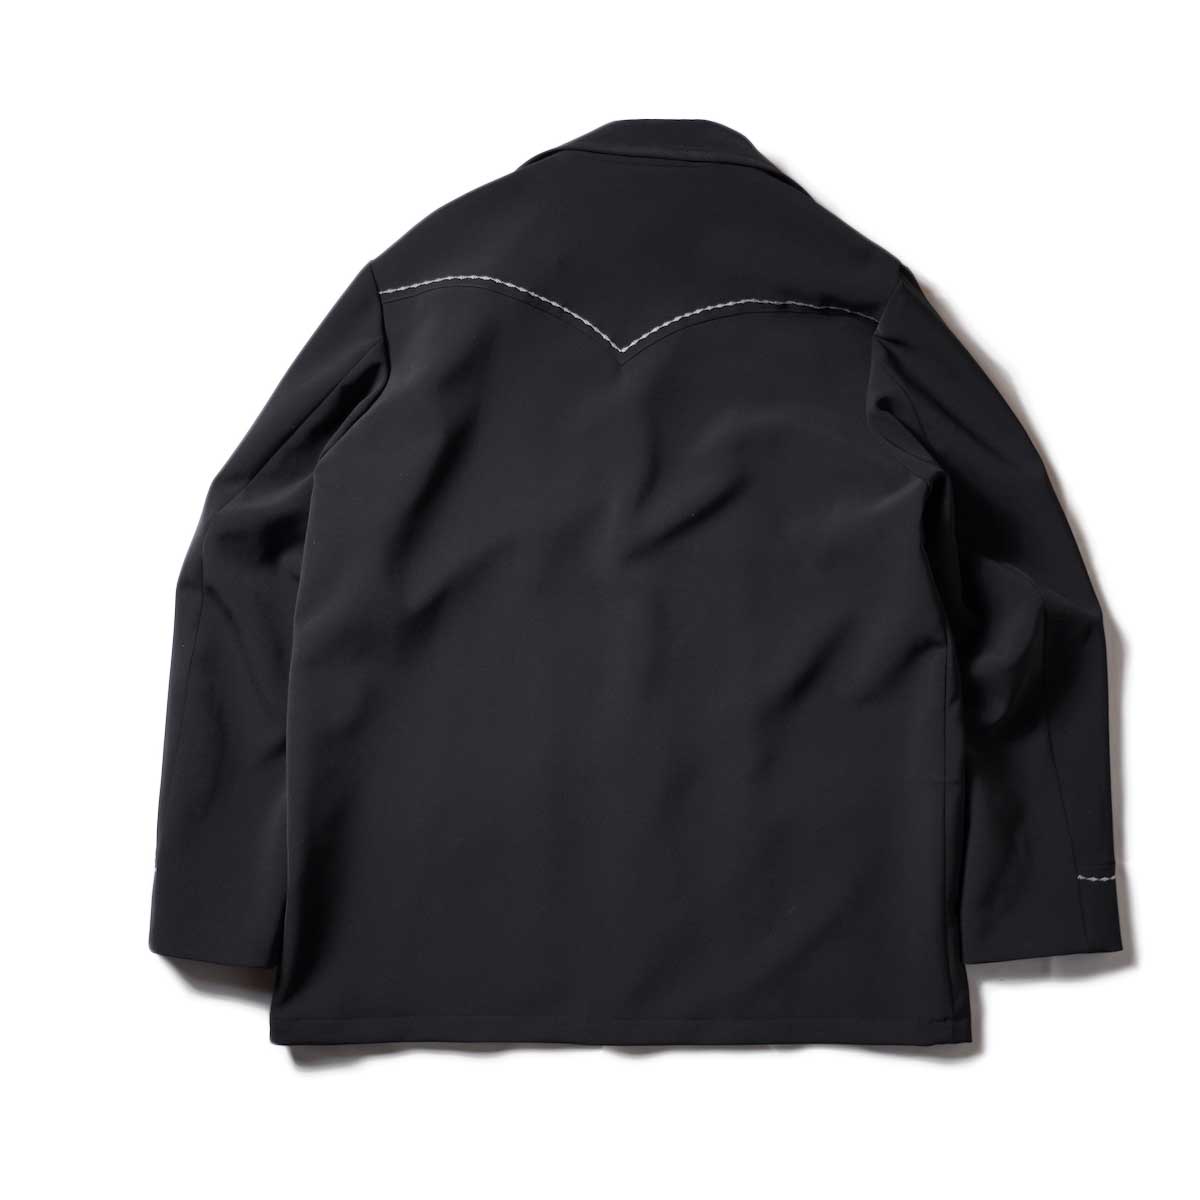 Needles / WESTERN LEISURE JACKET - PE/PU DOUBLE CLOTH (Black)背面